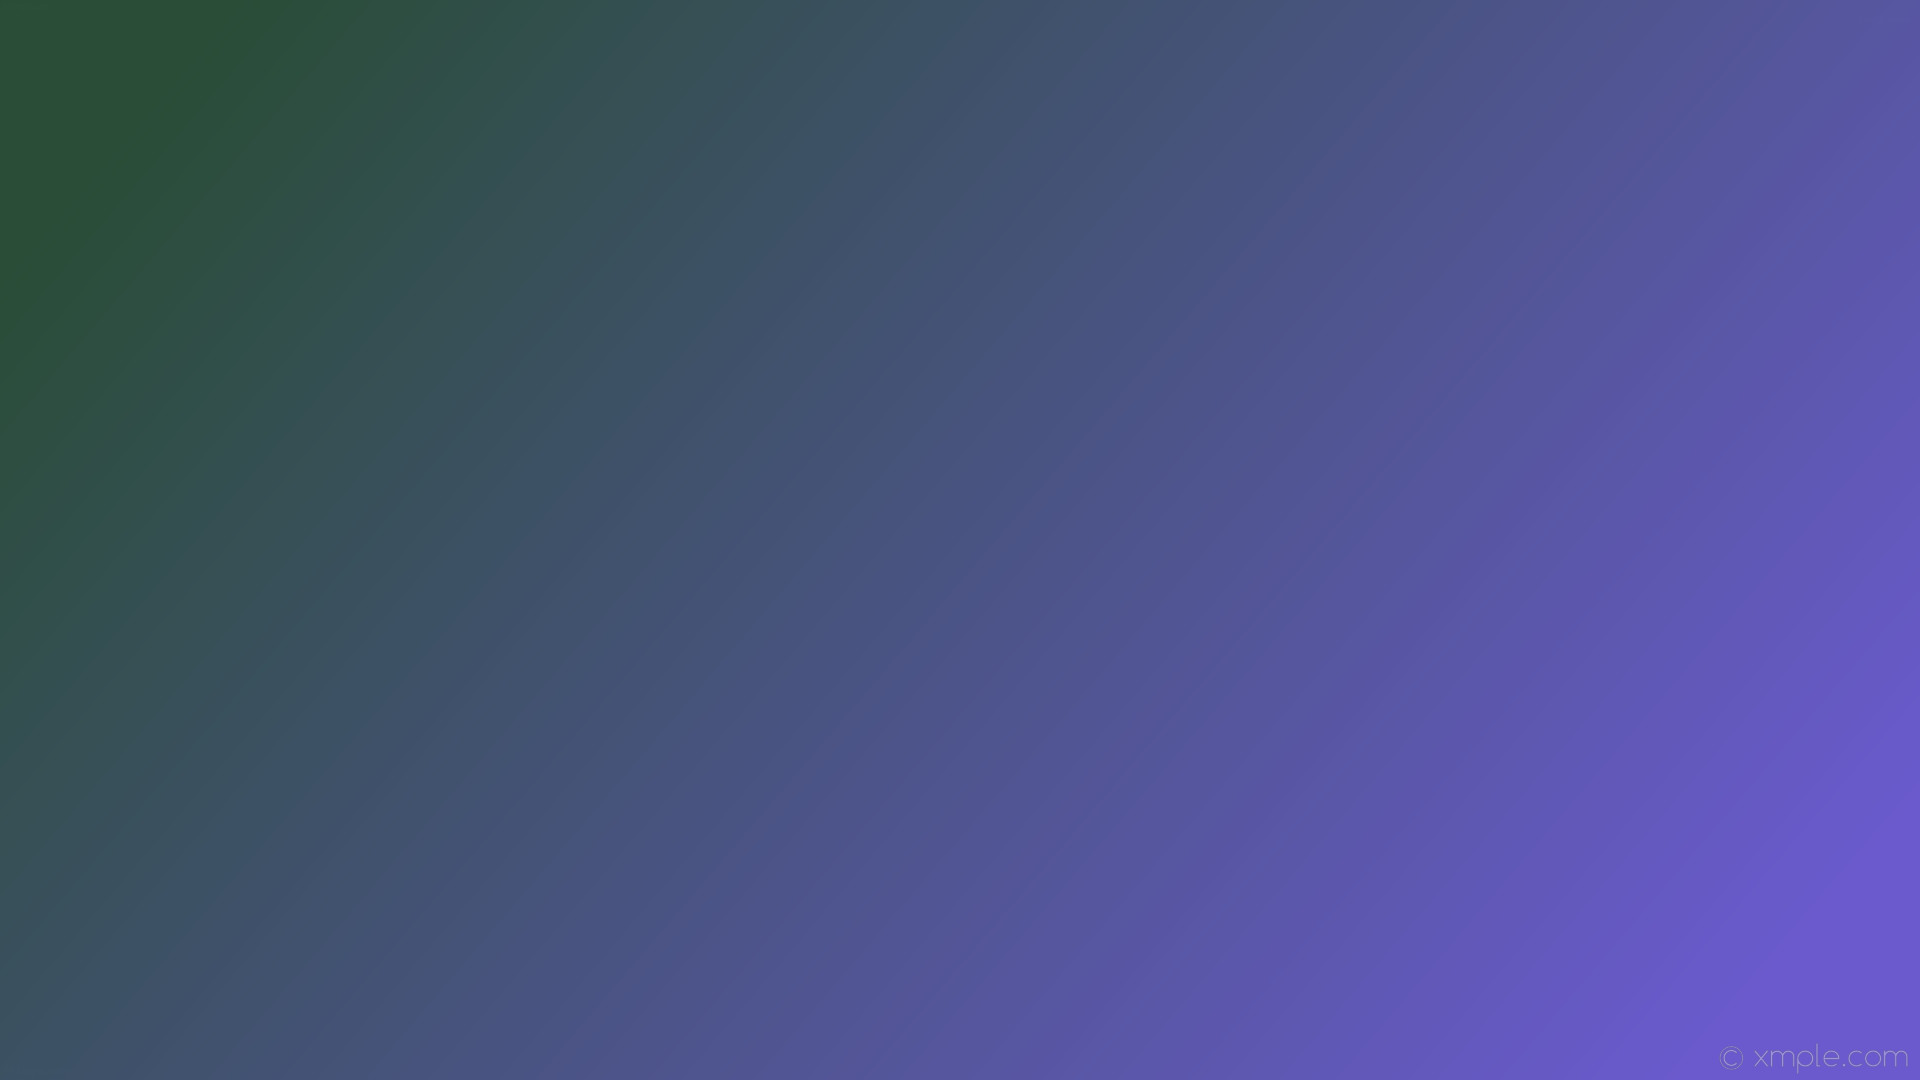 1920x1080 wallpaper turquoise linear purple gradient slate blue #294d37 #6a5acd 165Â°